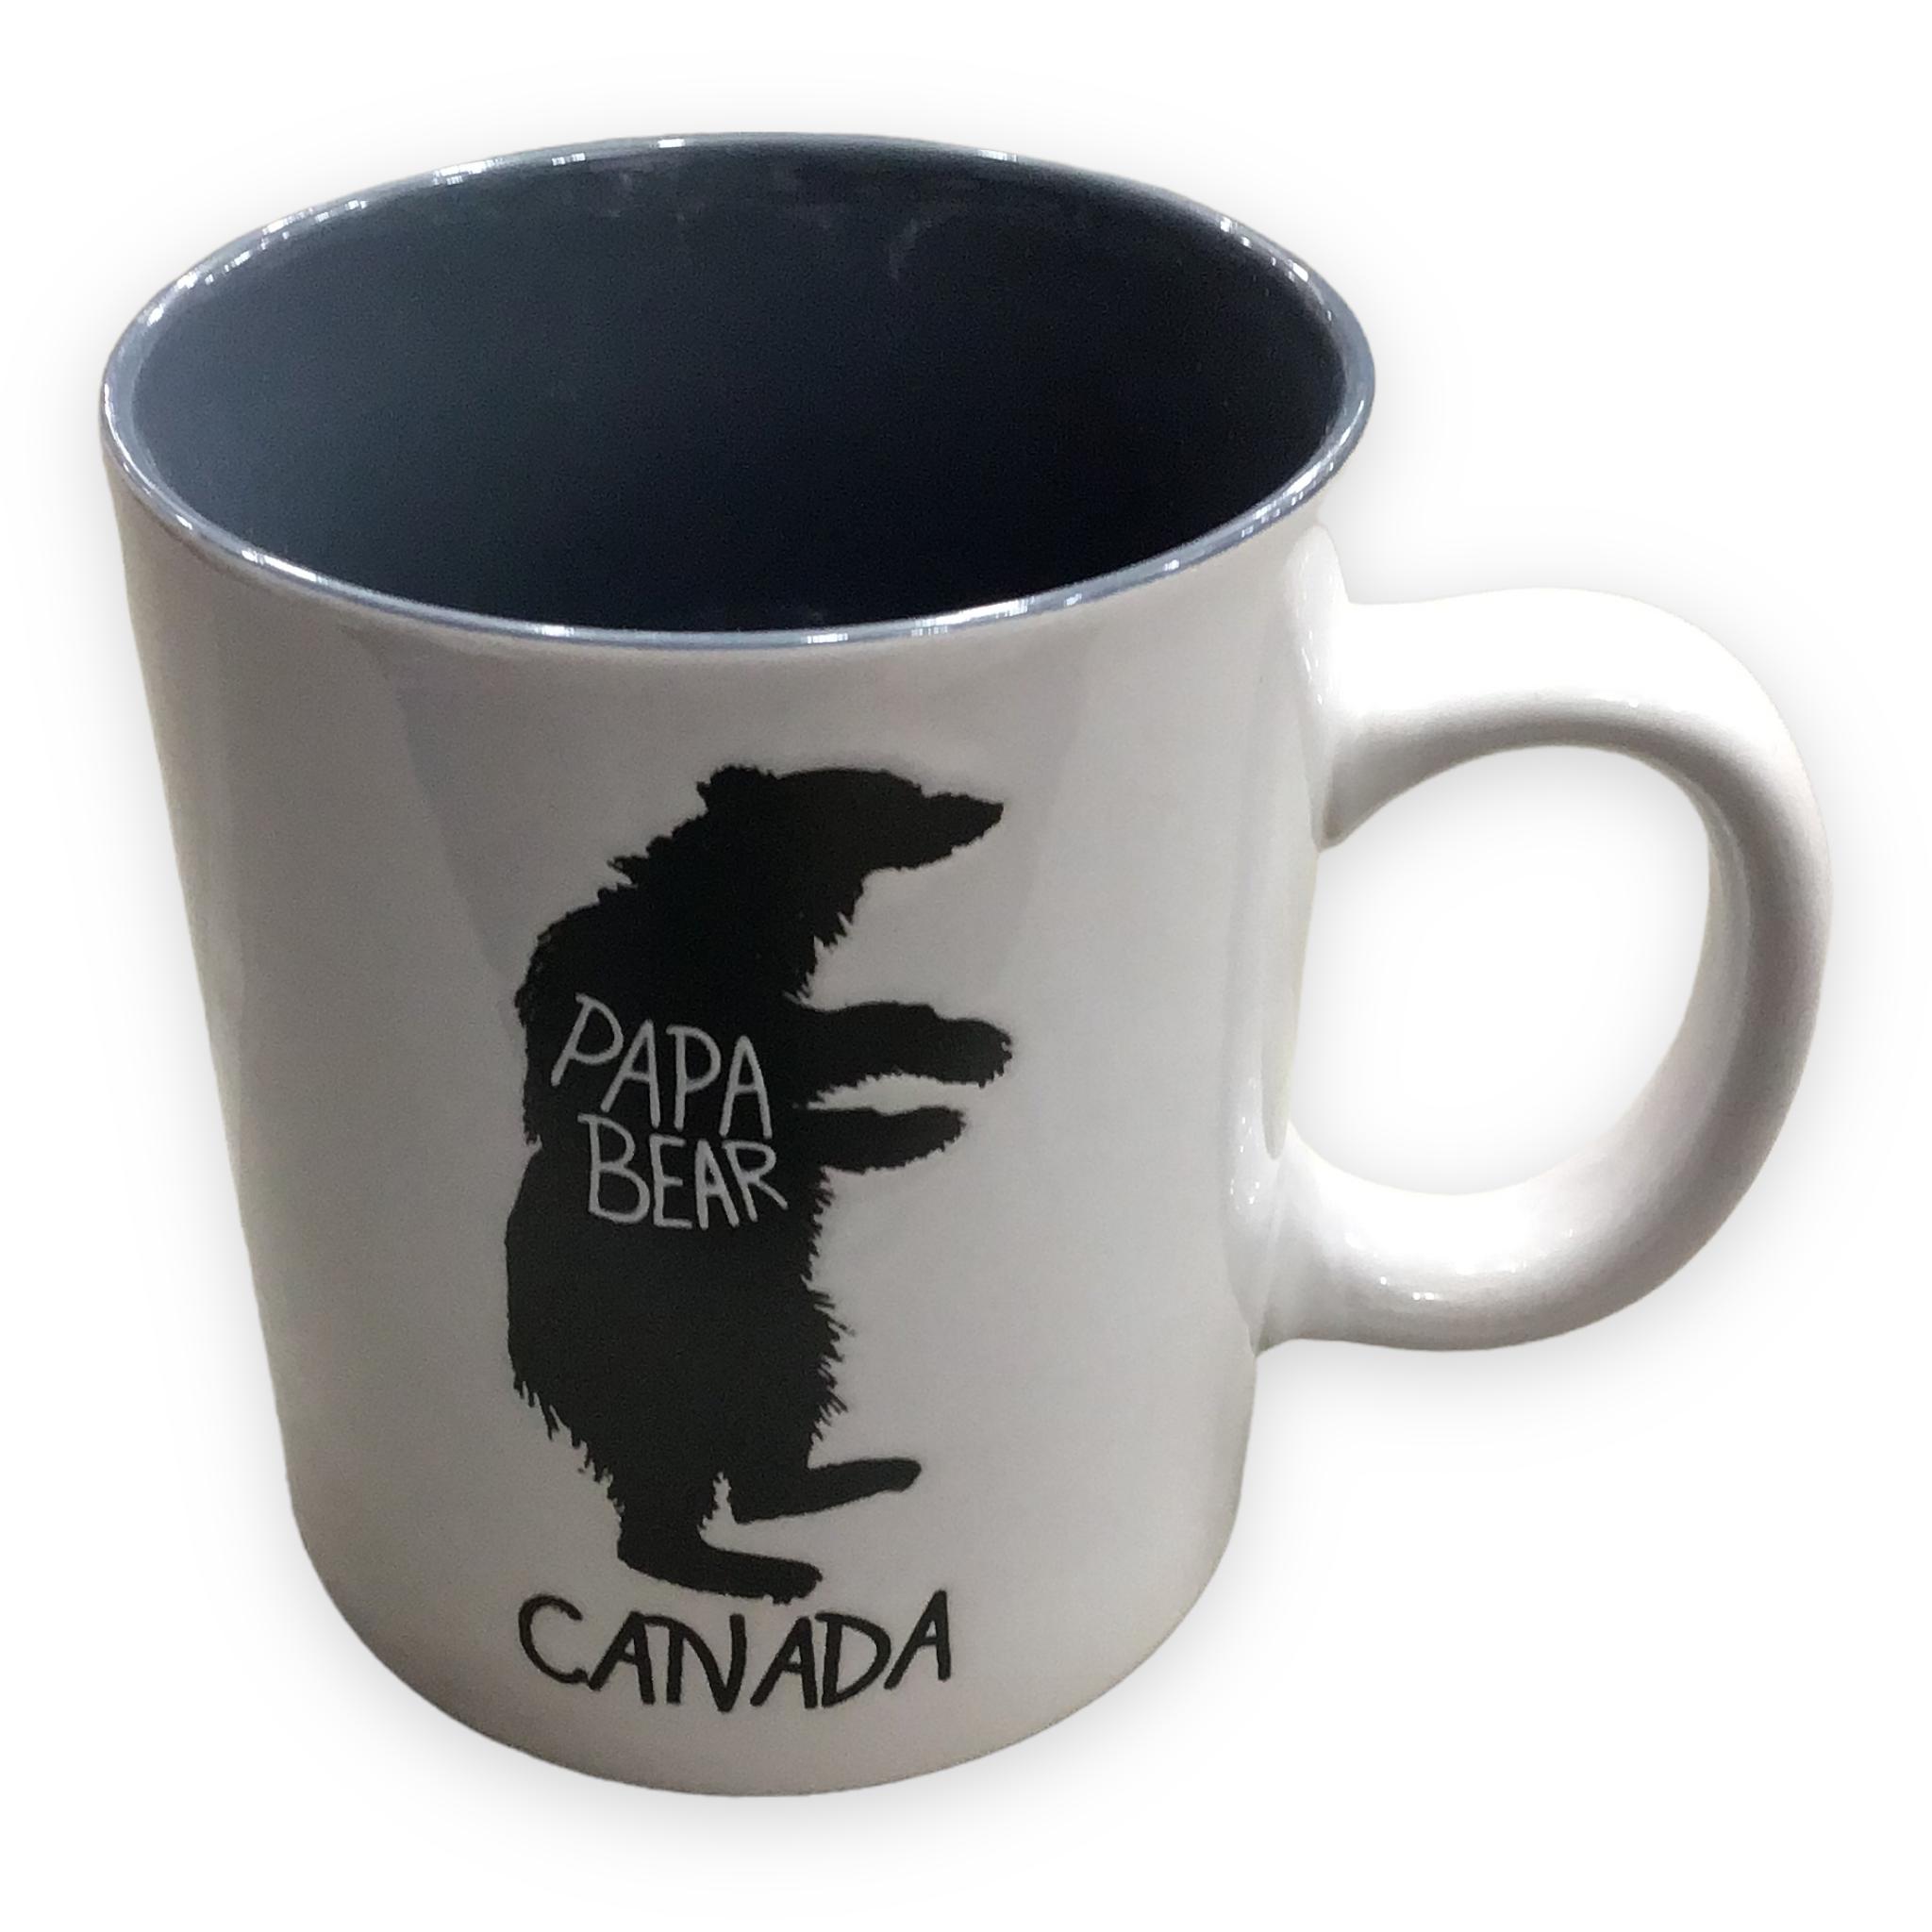 PAPA BEAR COFFEE MUG - 18 OZ CERAMIC COFFEE CUP CANADA PAPA BEAR